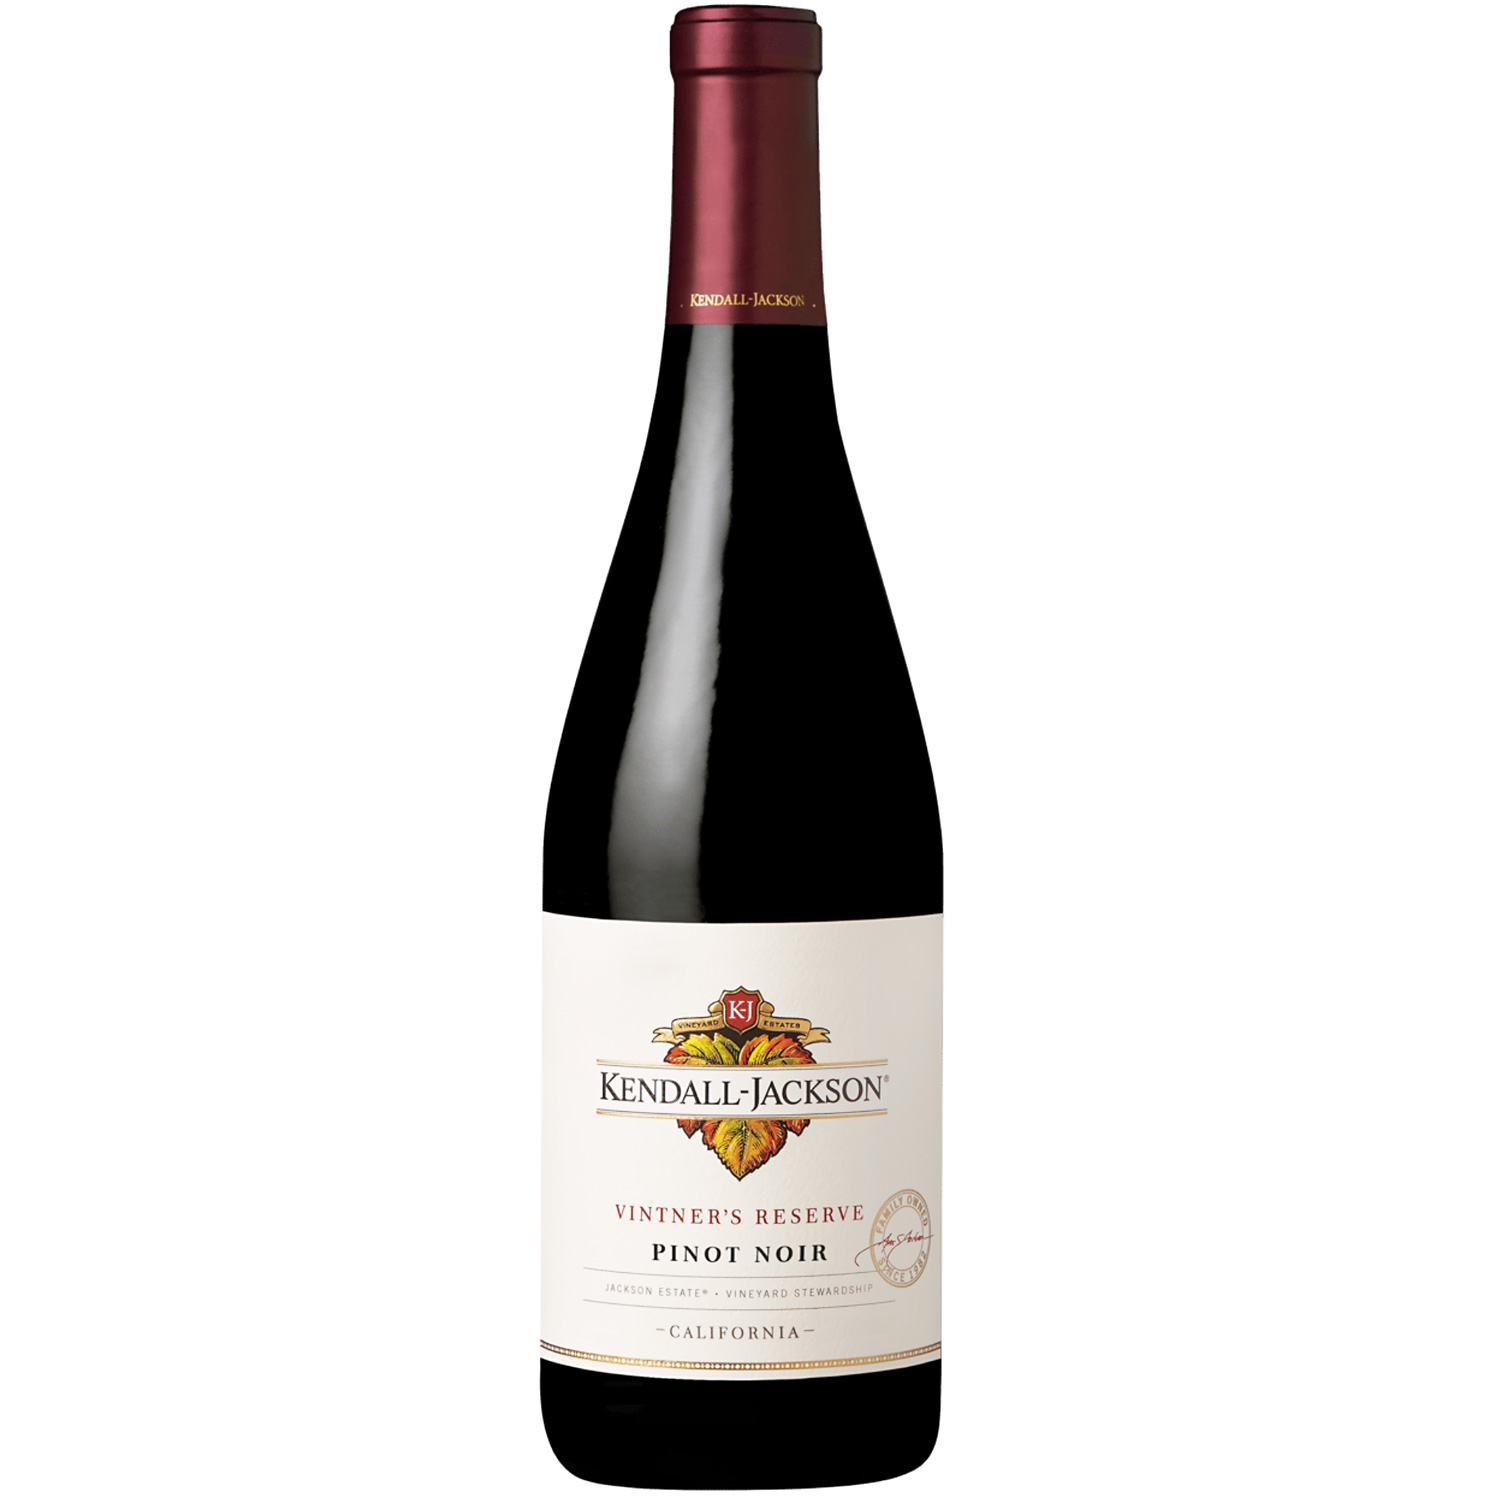 Kendall-Jackson Pinot Noir Vintner's Reserve 2019